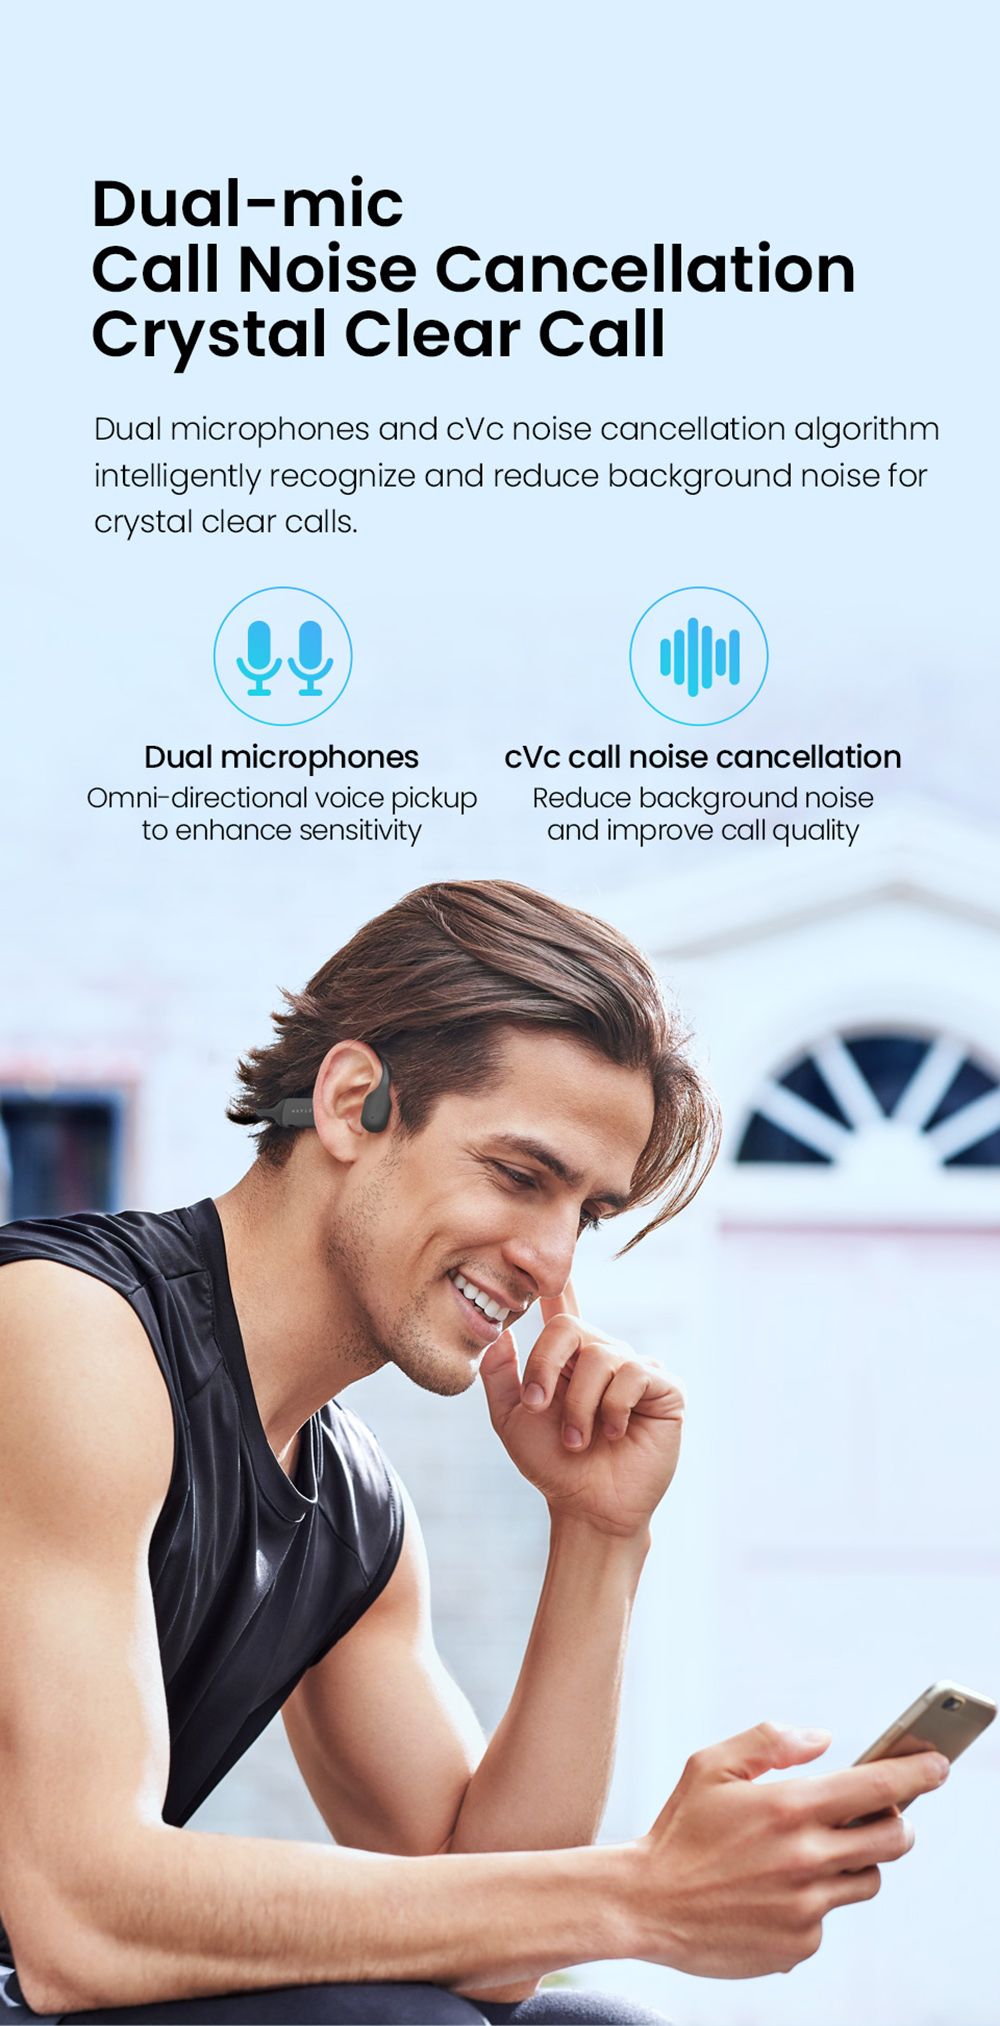 HAYLOU PurFree (BC01) Bone Conduction Headphones Qualcomm 3044 Bluetooth 5.2 Wireless Earphones IP67 Waterproof